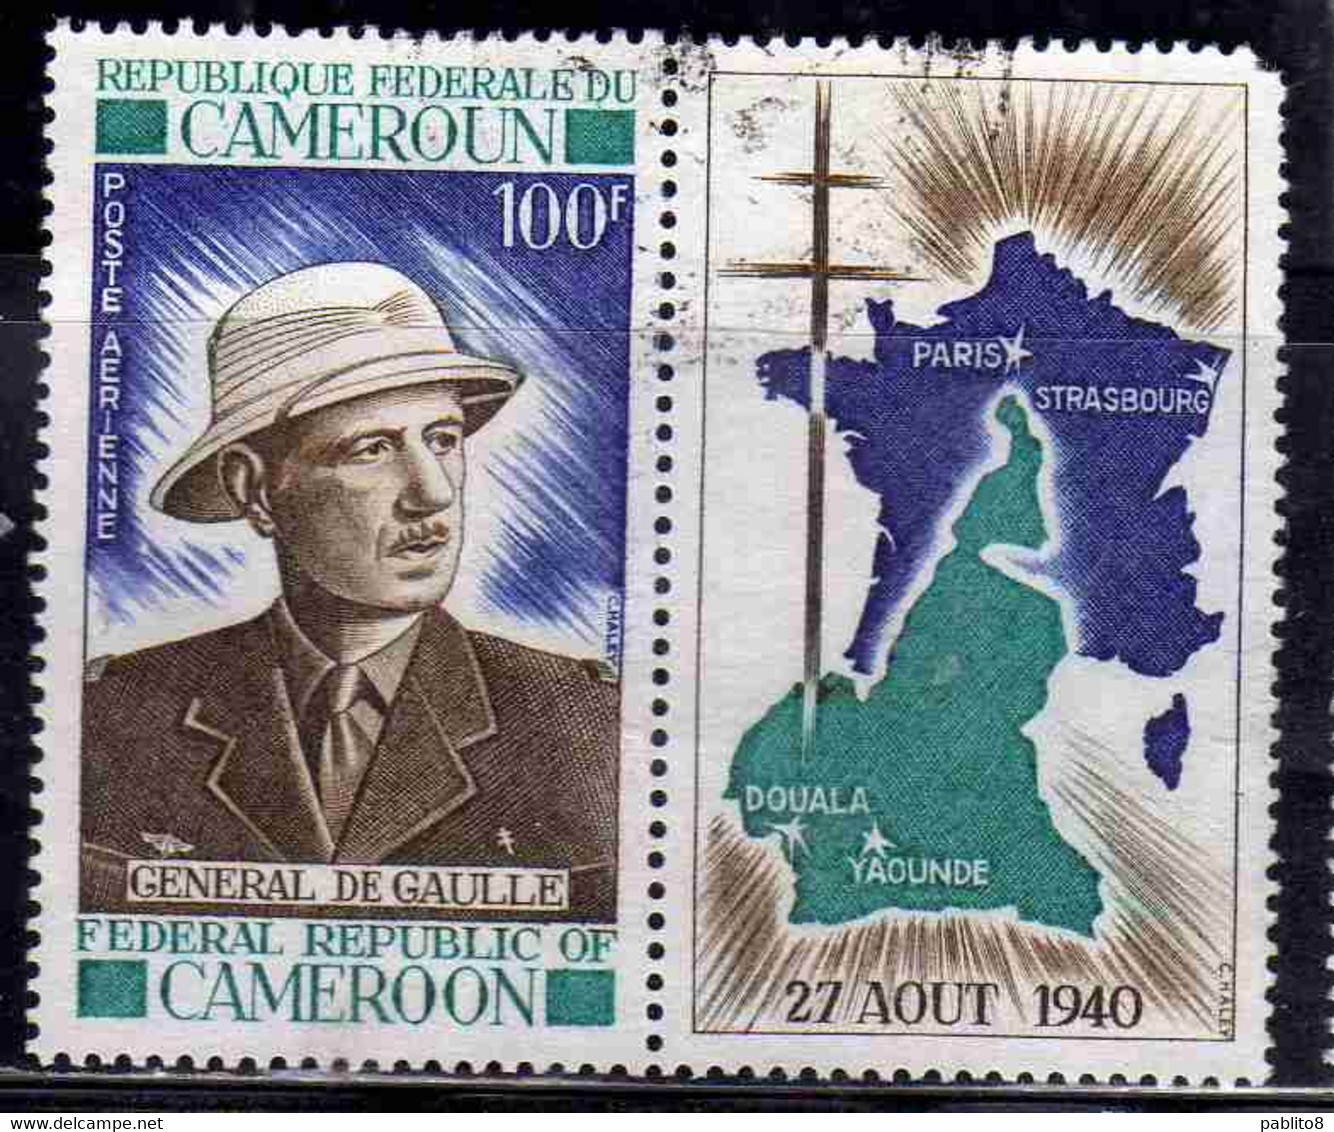 CAMEROUN CAMERUN 1971 AIR MAIL AIRMAIL POSTE AERIENNE GENERAL DE GAULLE 100fr USED USATO OBLITERE' - Kamerun (1960-...)